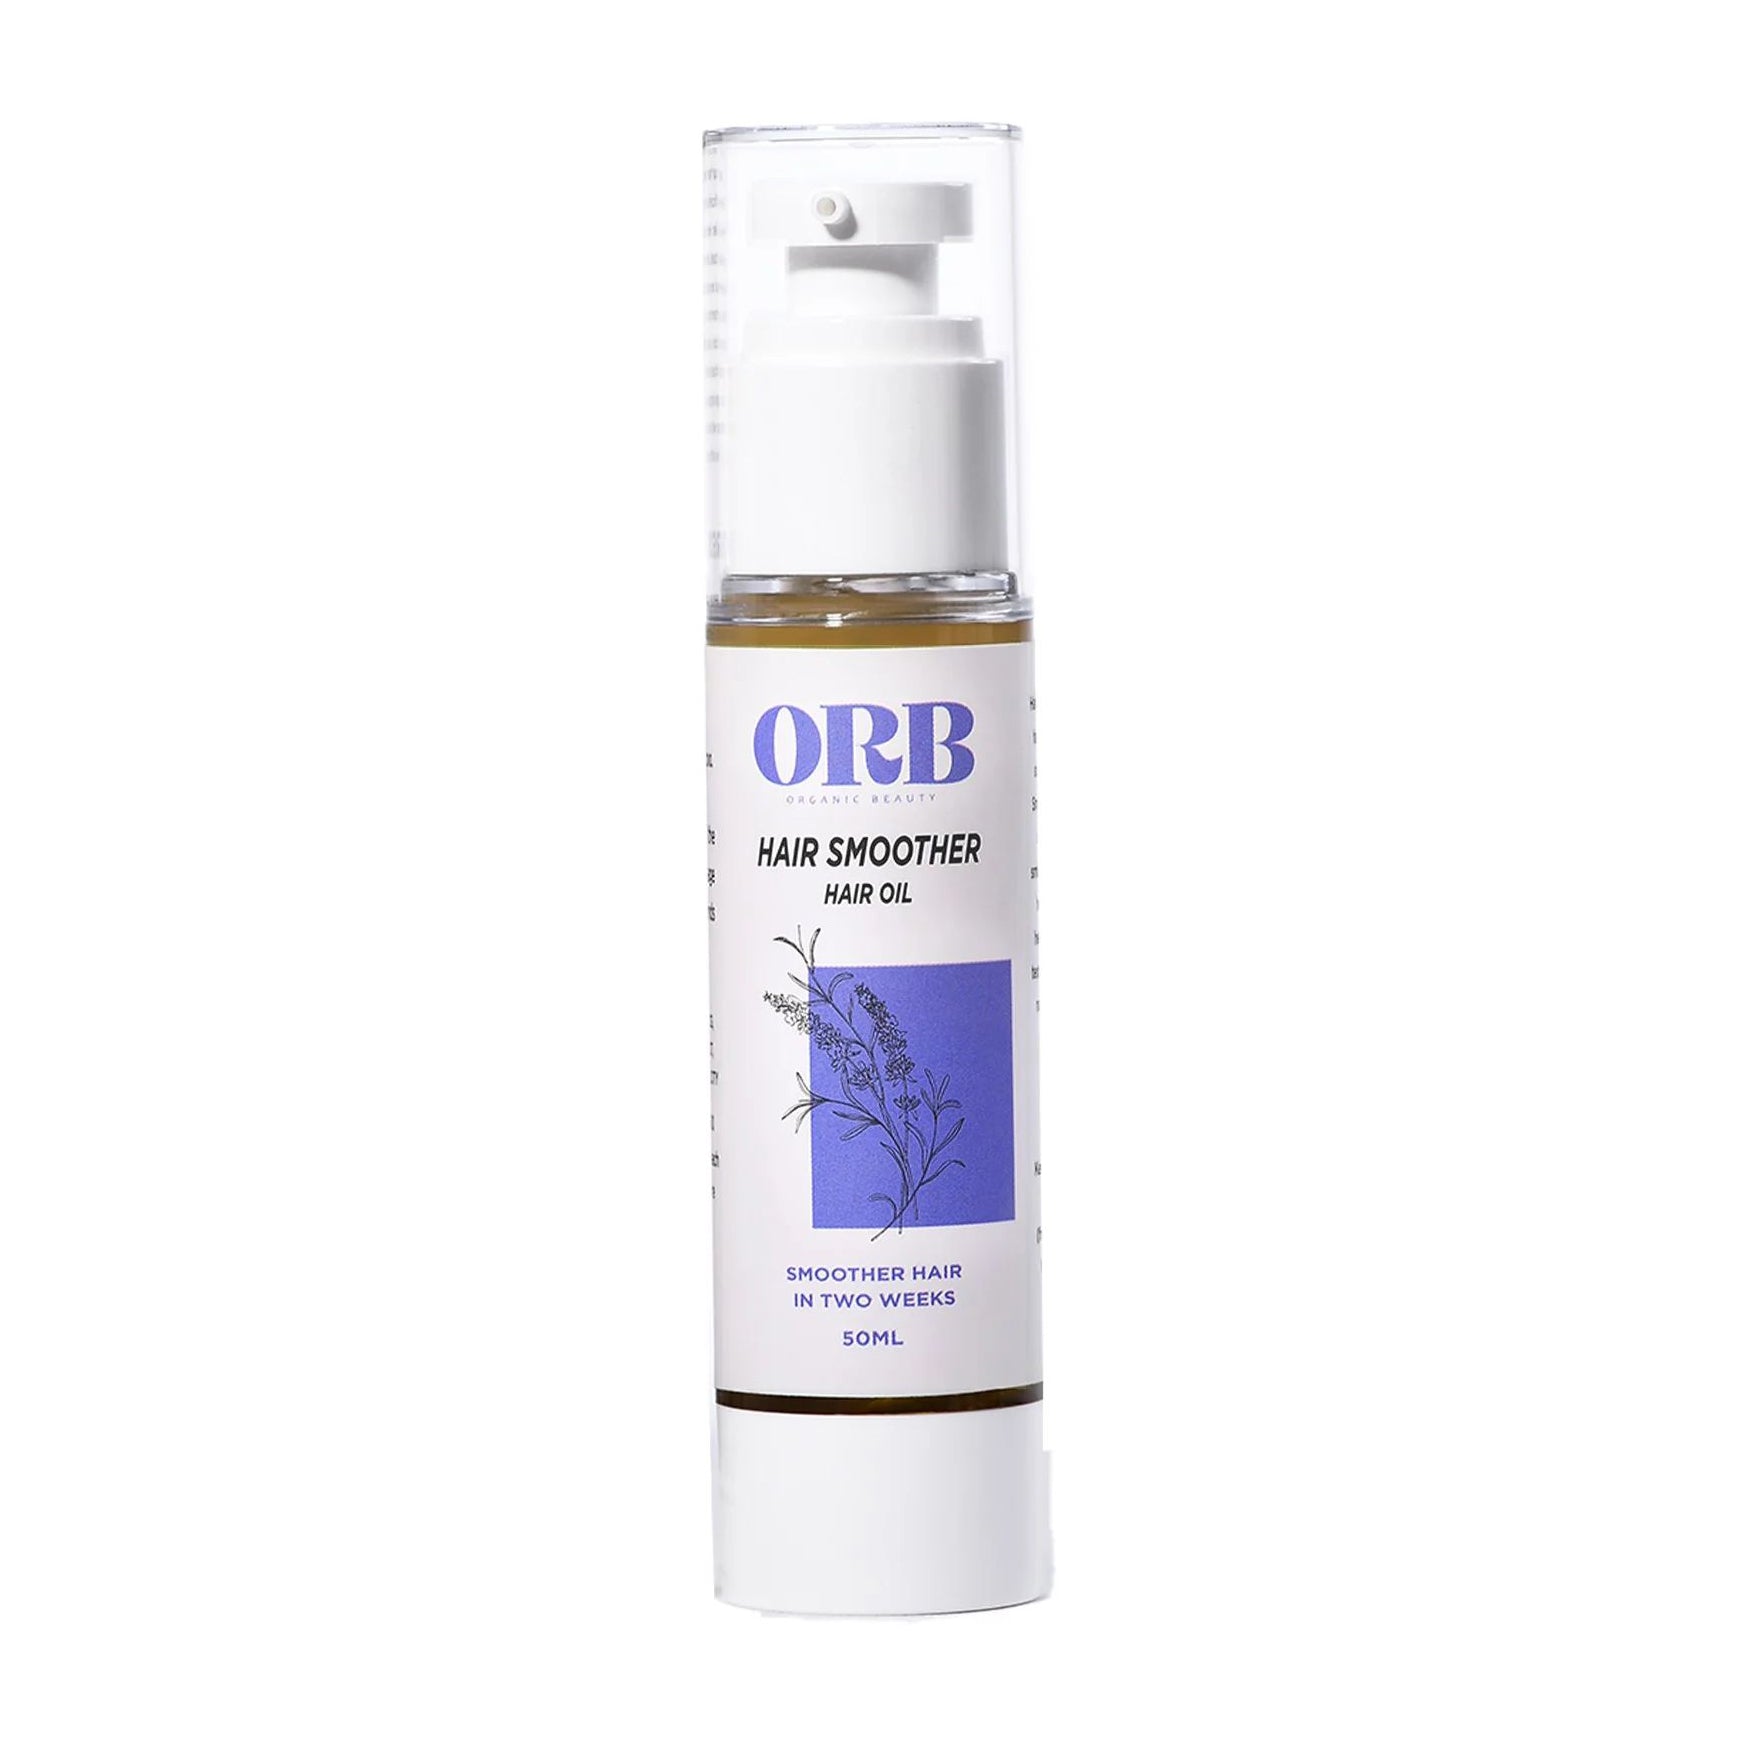 ORB Hair Smoother Hair Oil - 50ml - Bloom Pharmacy